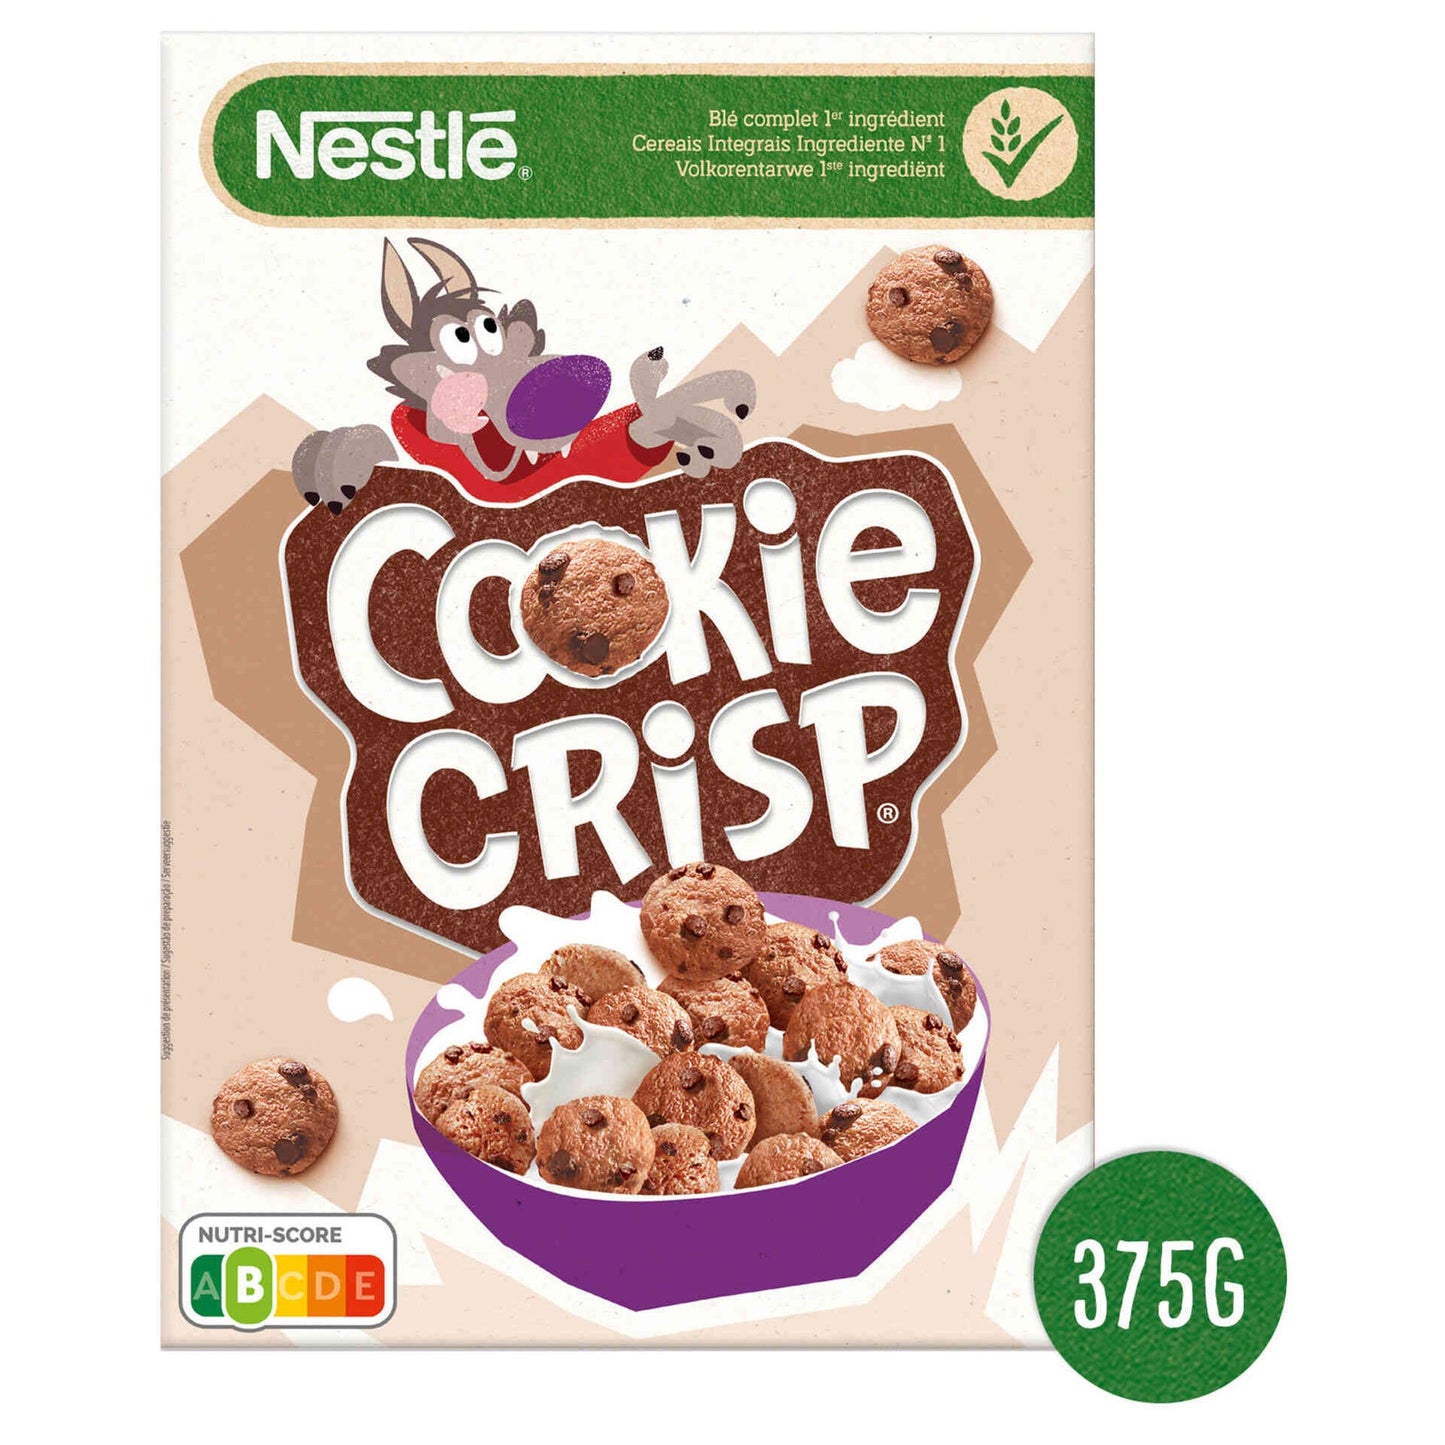 Chocolate Chip Cookie Crisp 375g